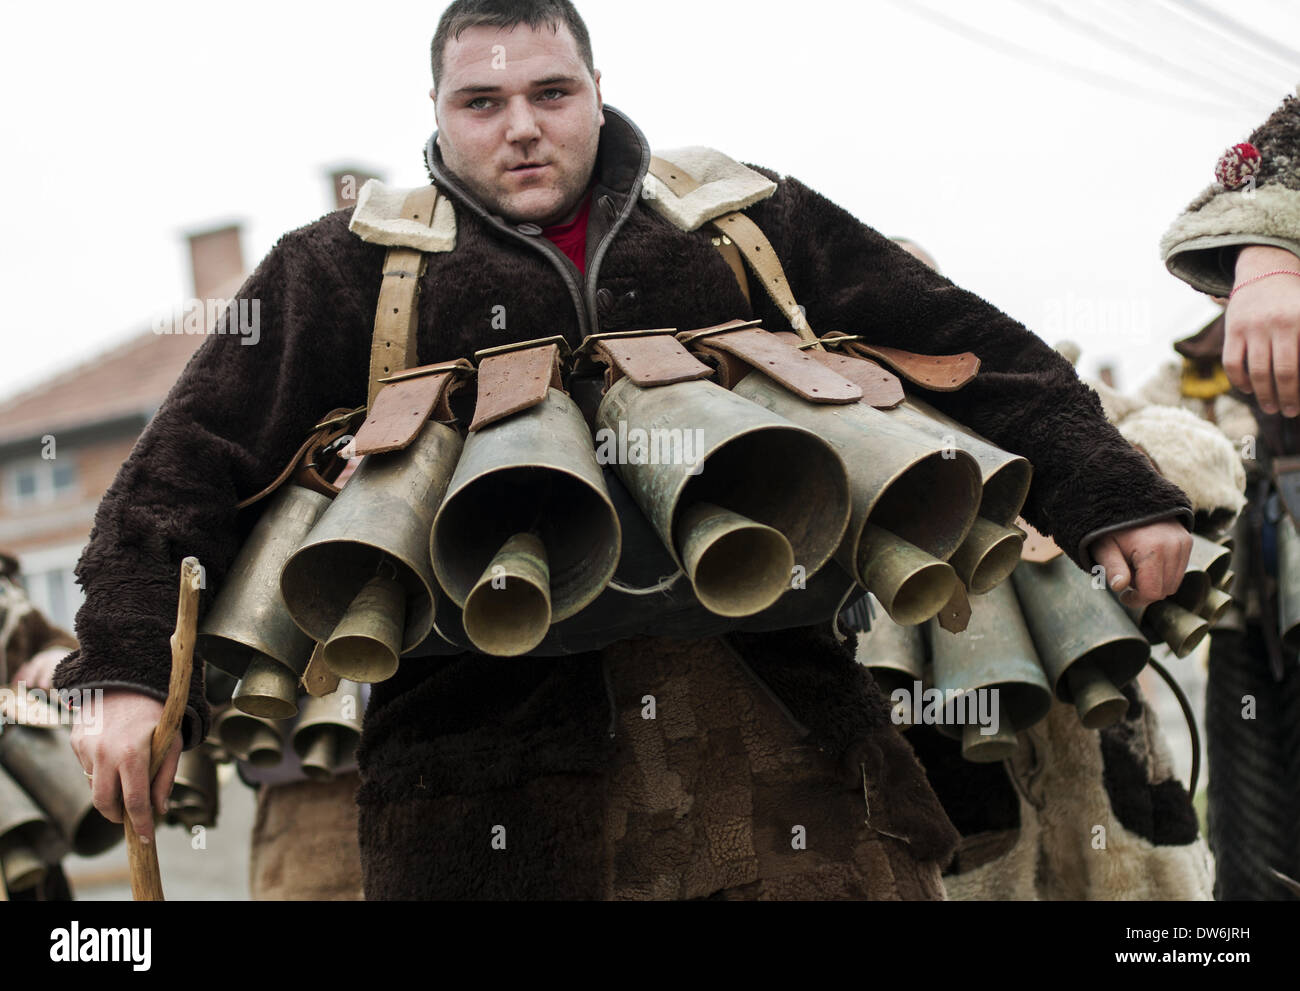 march-1-2014-rakovski-bulgaria-a-man-wearing-an-elaborate-array-of-DW6JRH.jpg